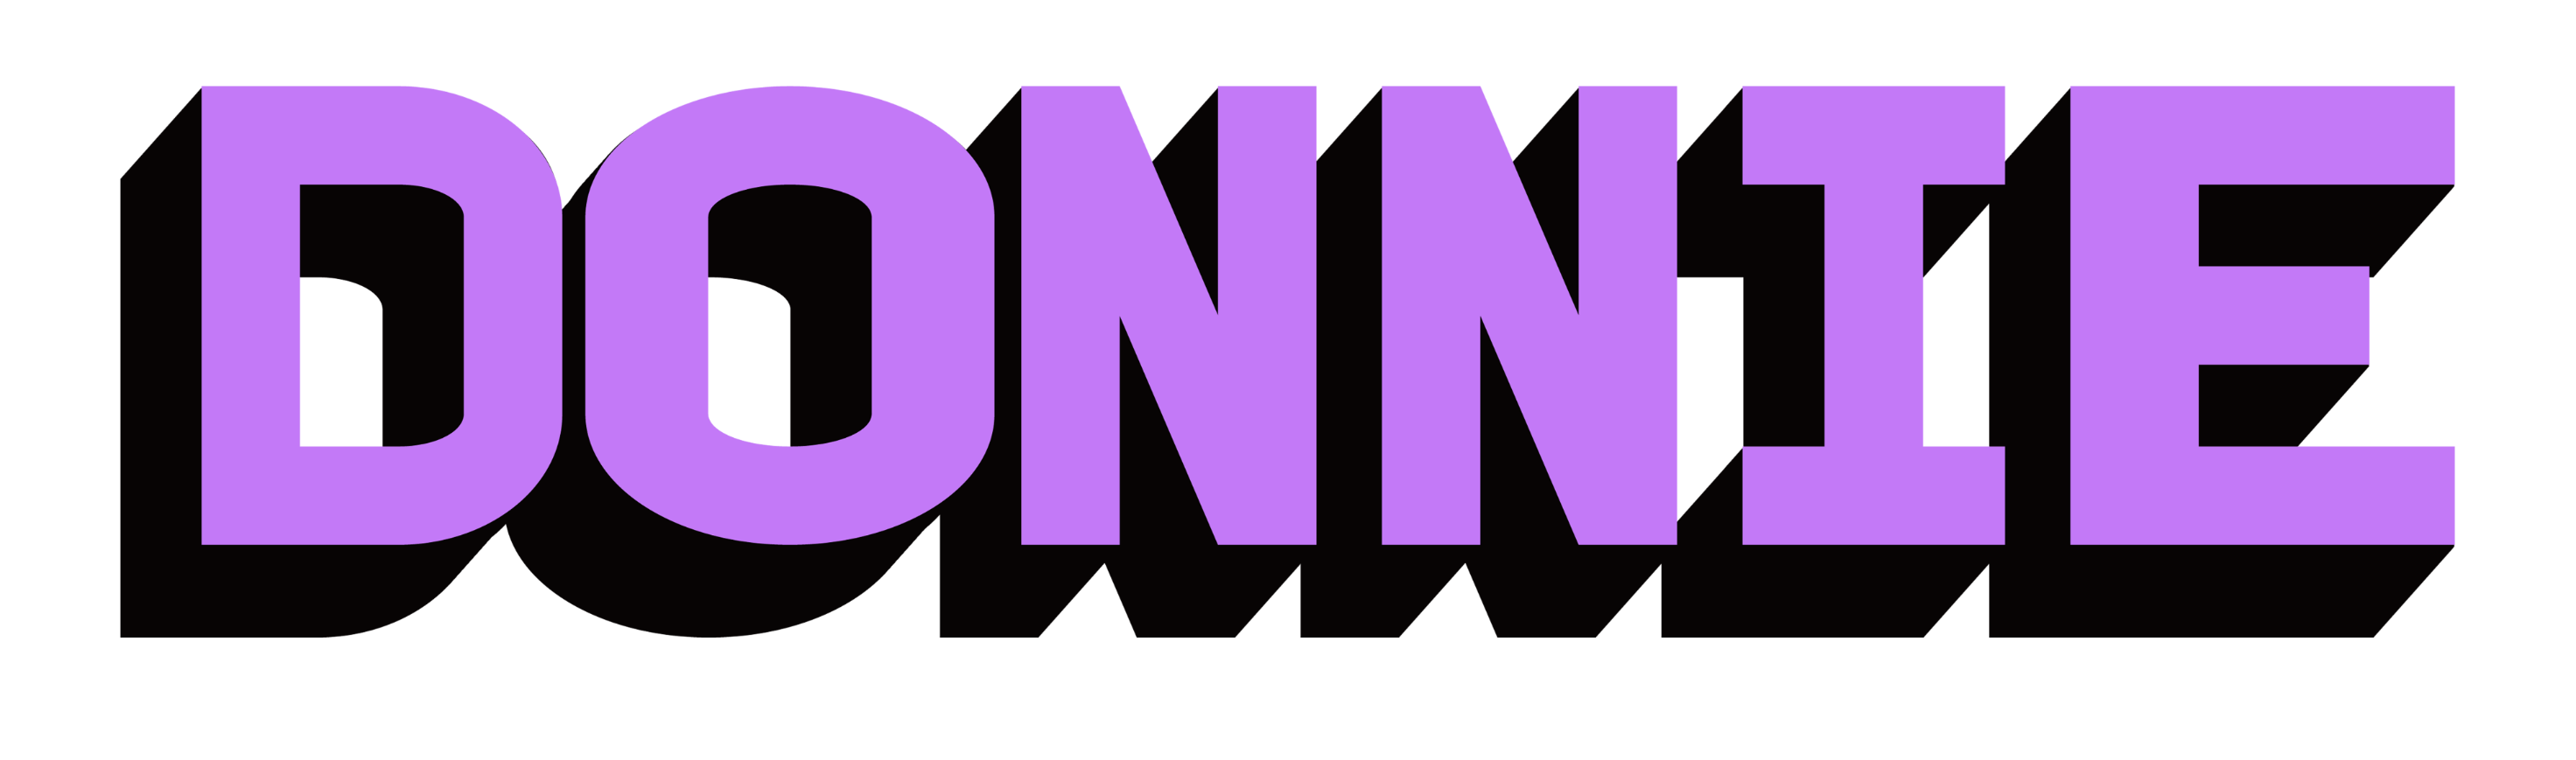 Donnie logo wite border